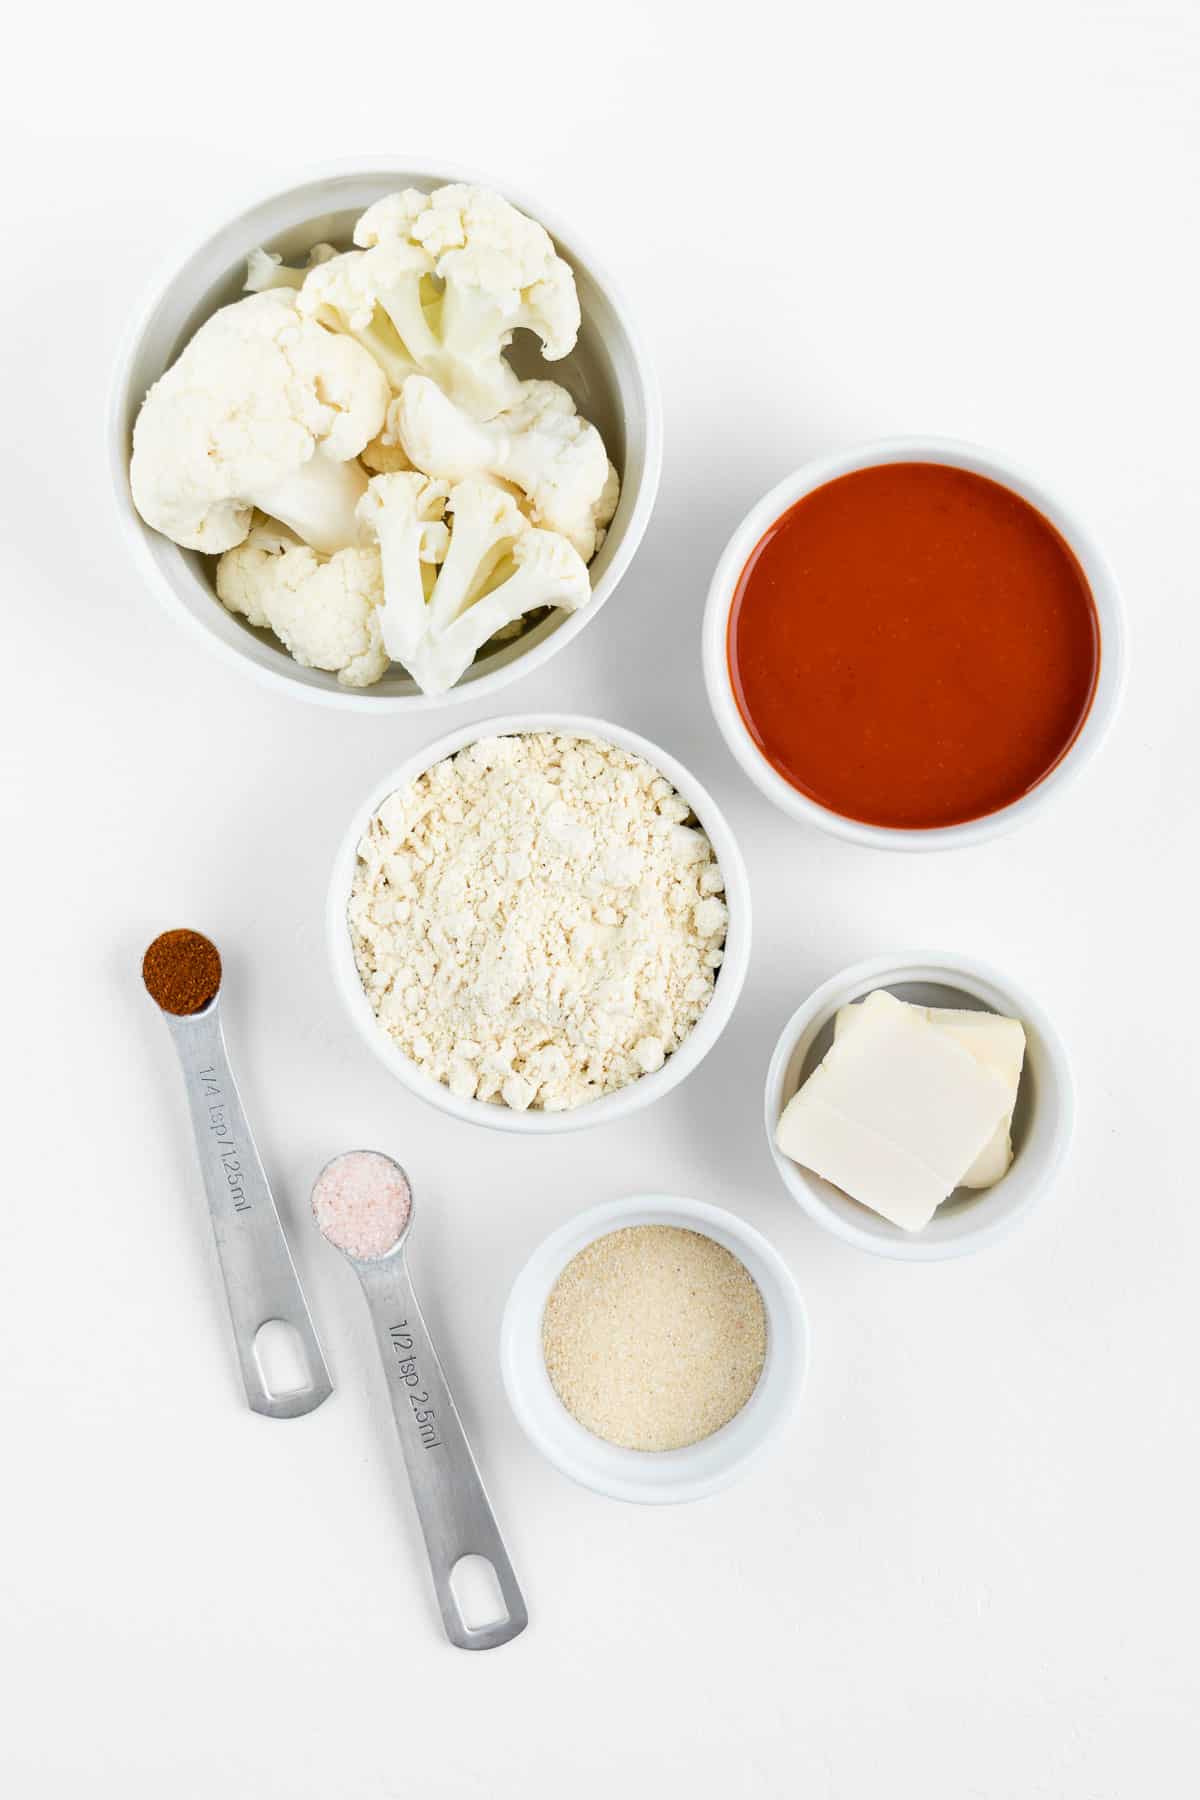 flour, hot sauce, vegan butter, garlic, salt, and smoked paprika inside white bowls